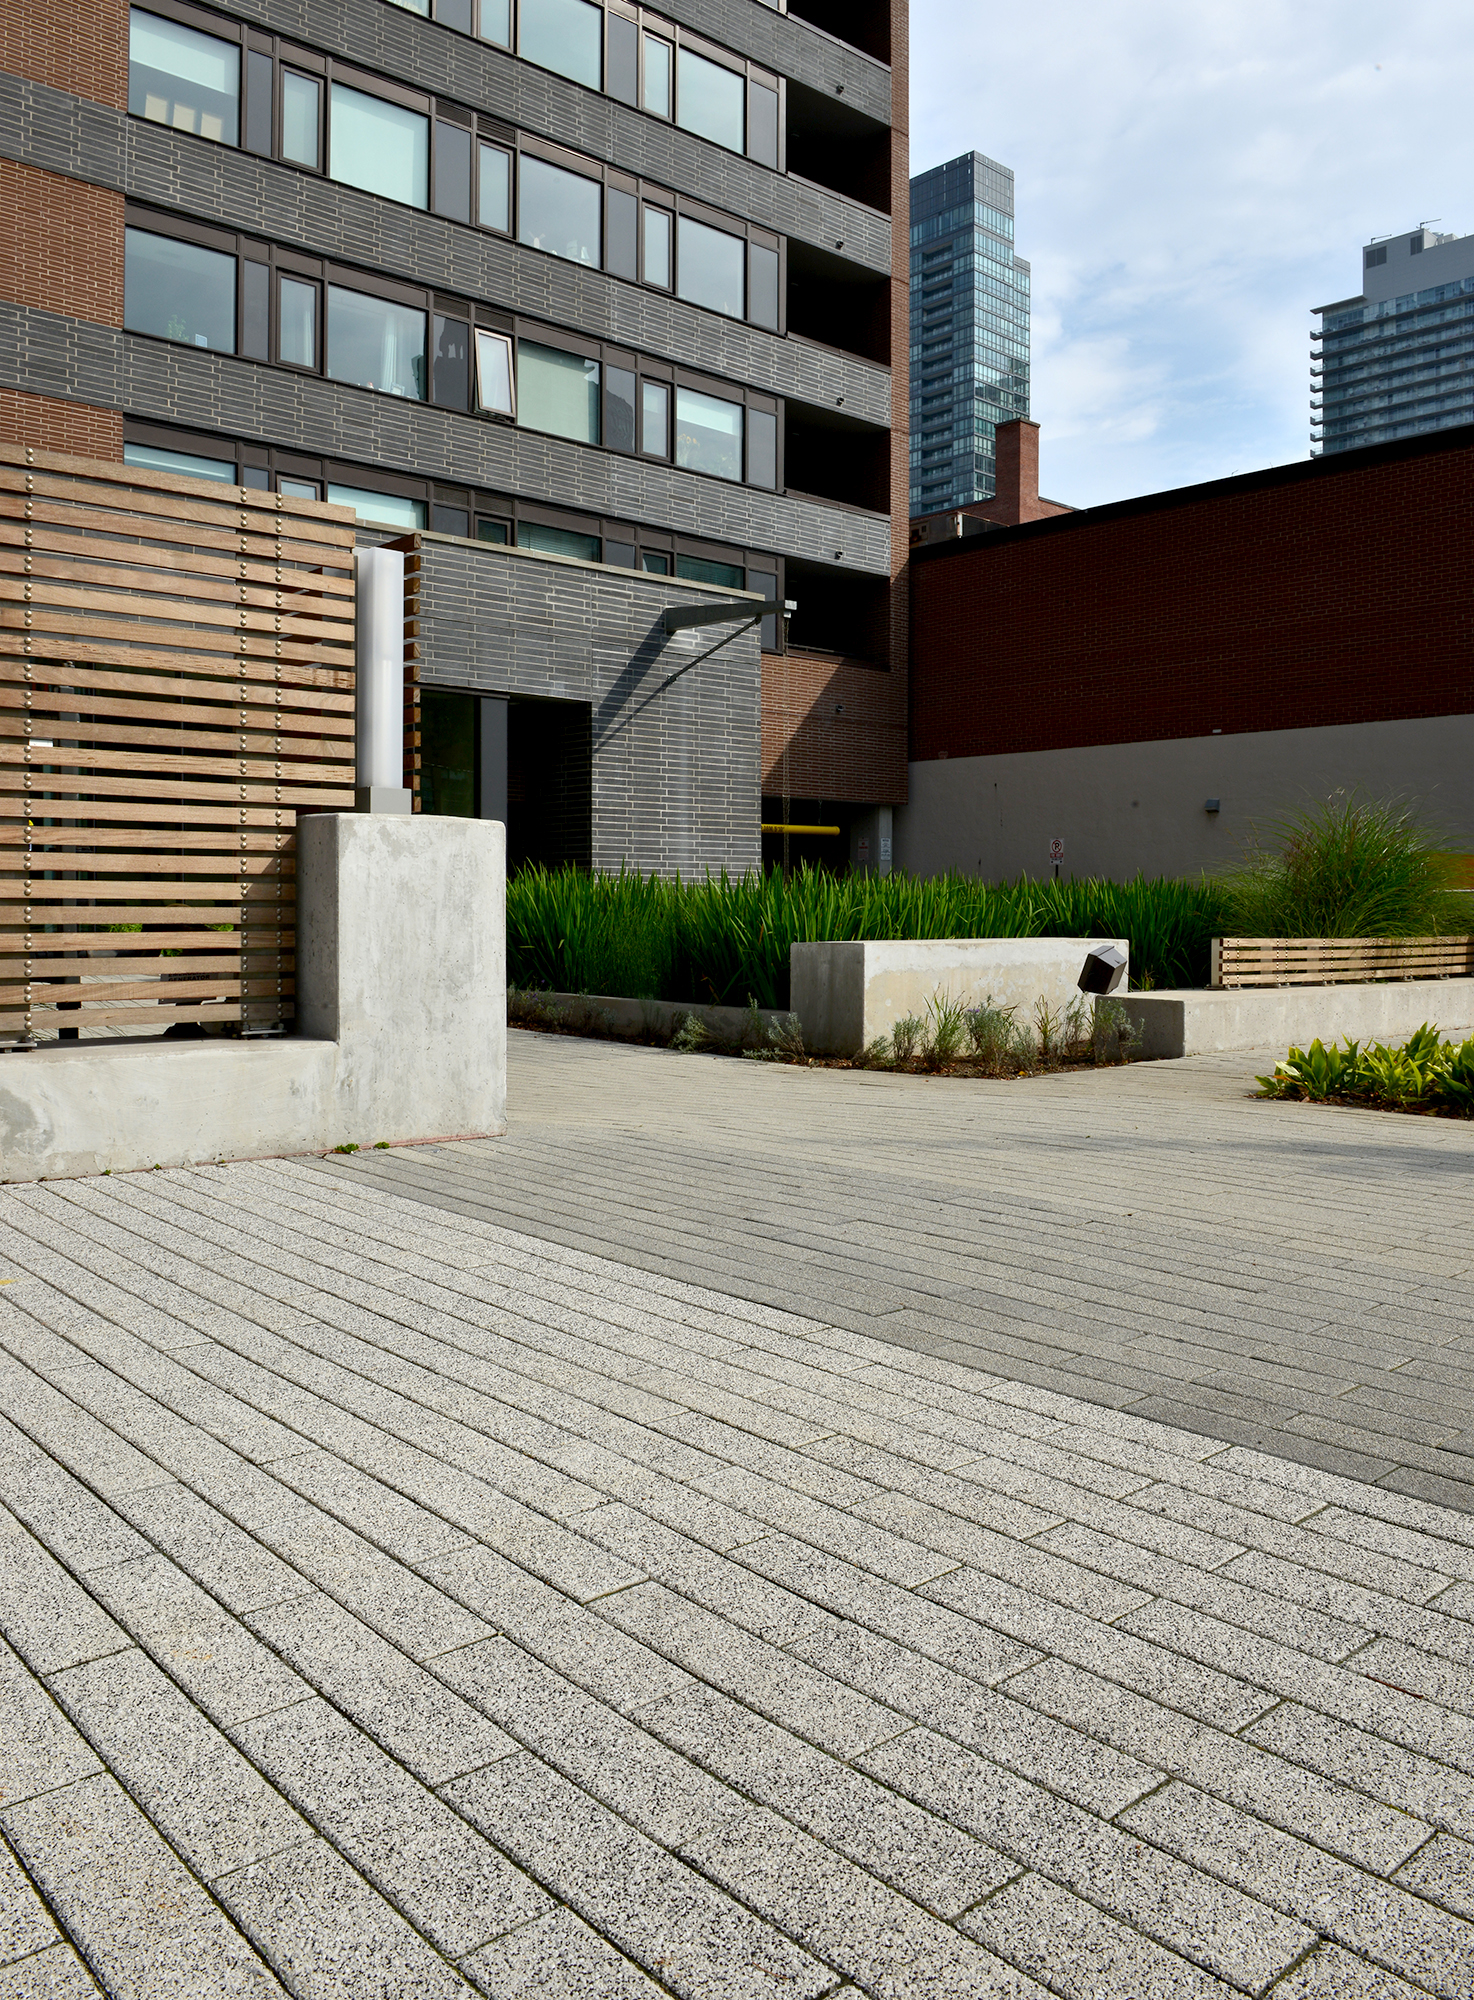 Unilock Promenade Plank pavers in a speckled Umbriano finish create a driveway for 400 Wellington Condominium in Toronto Ontario.